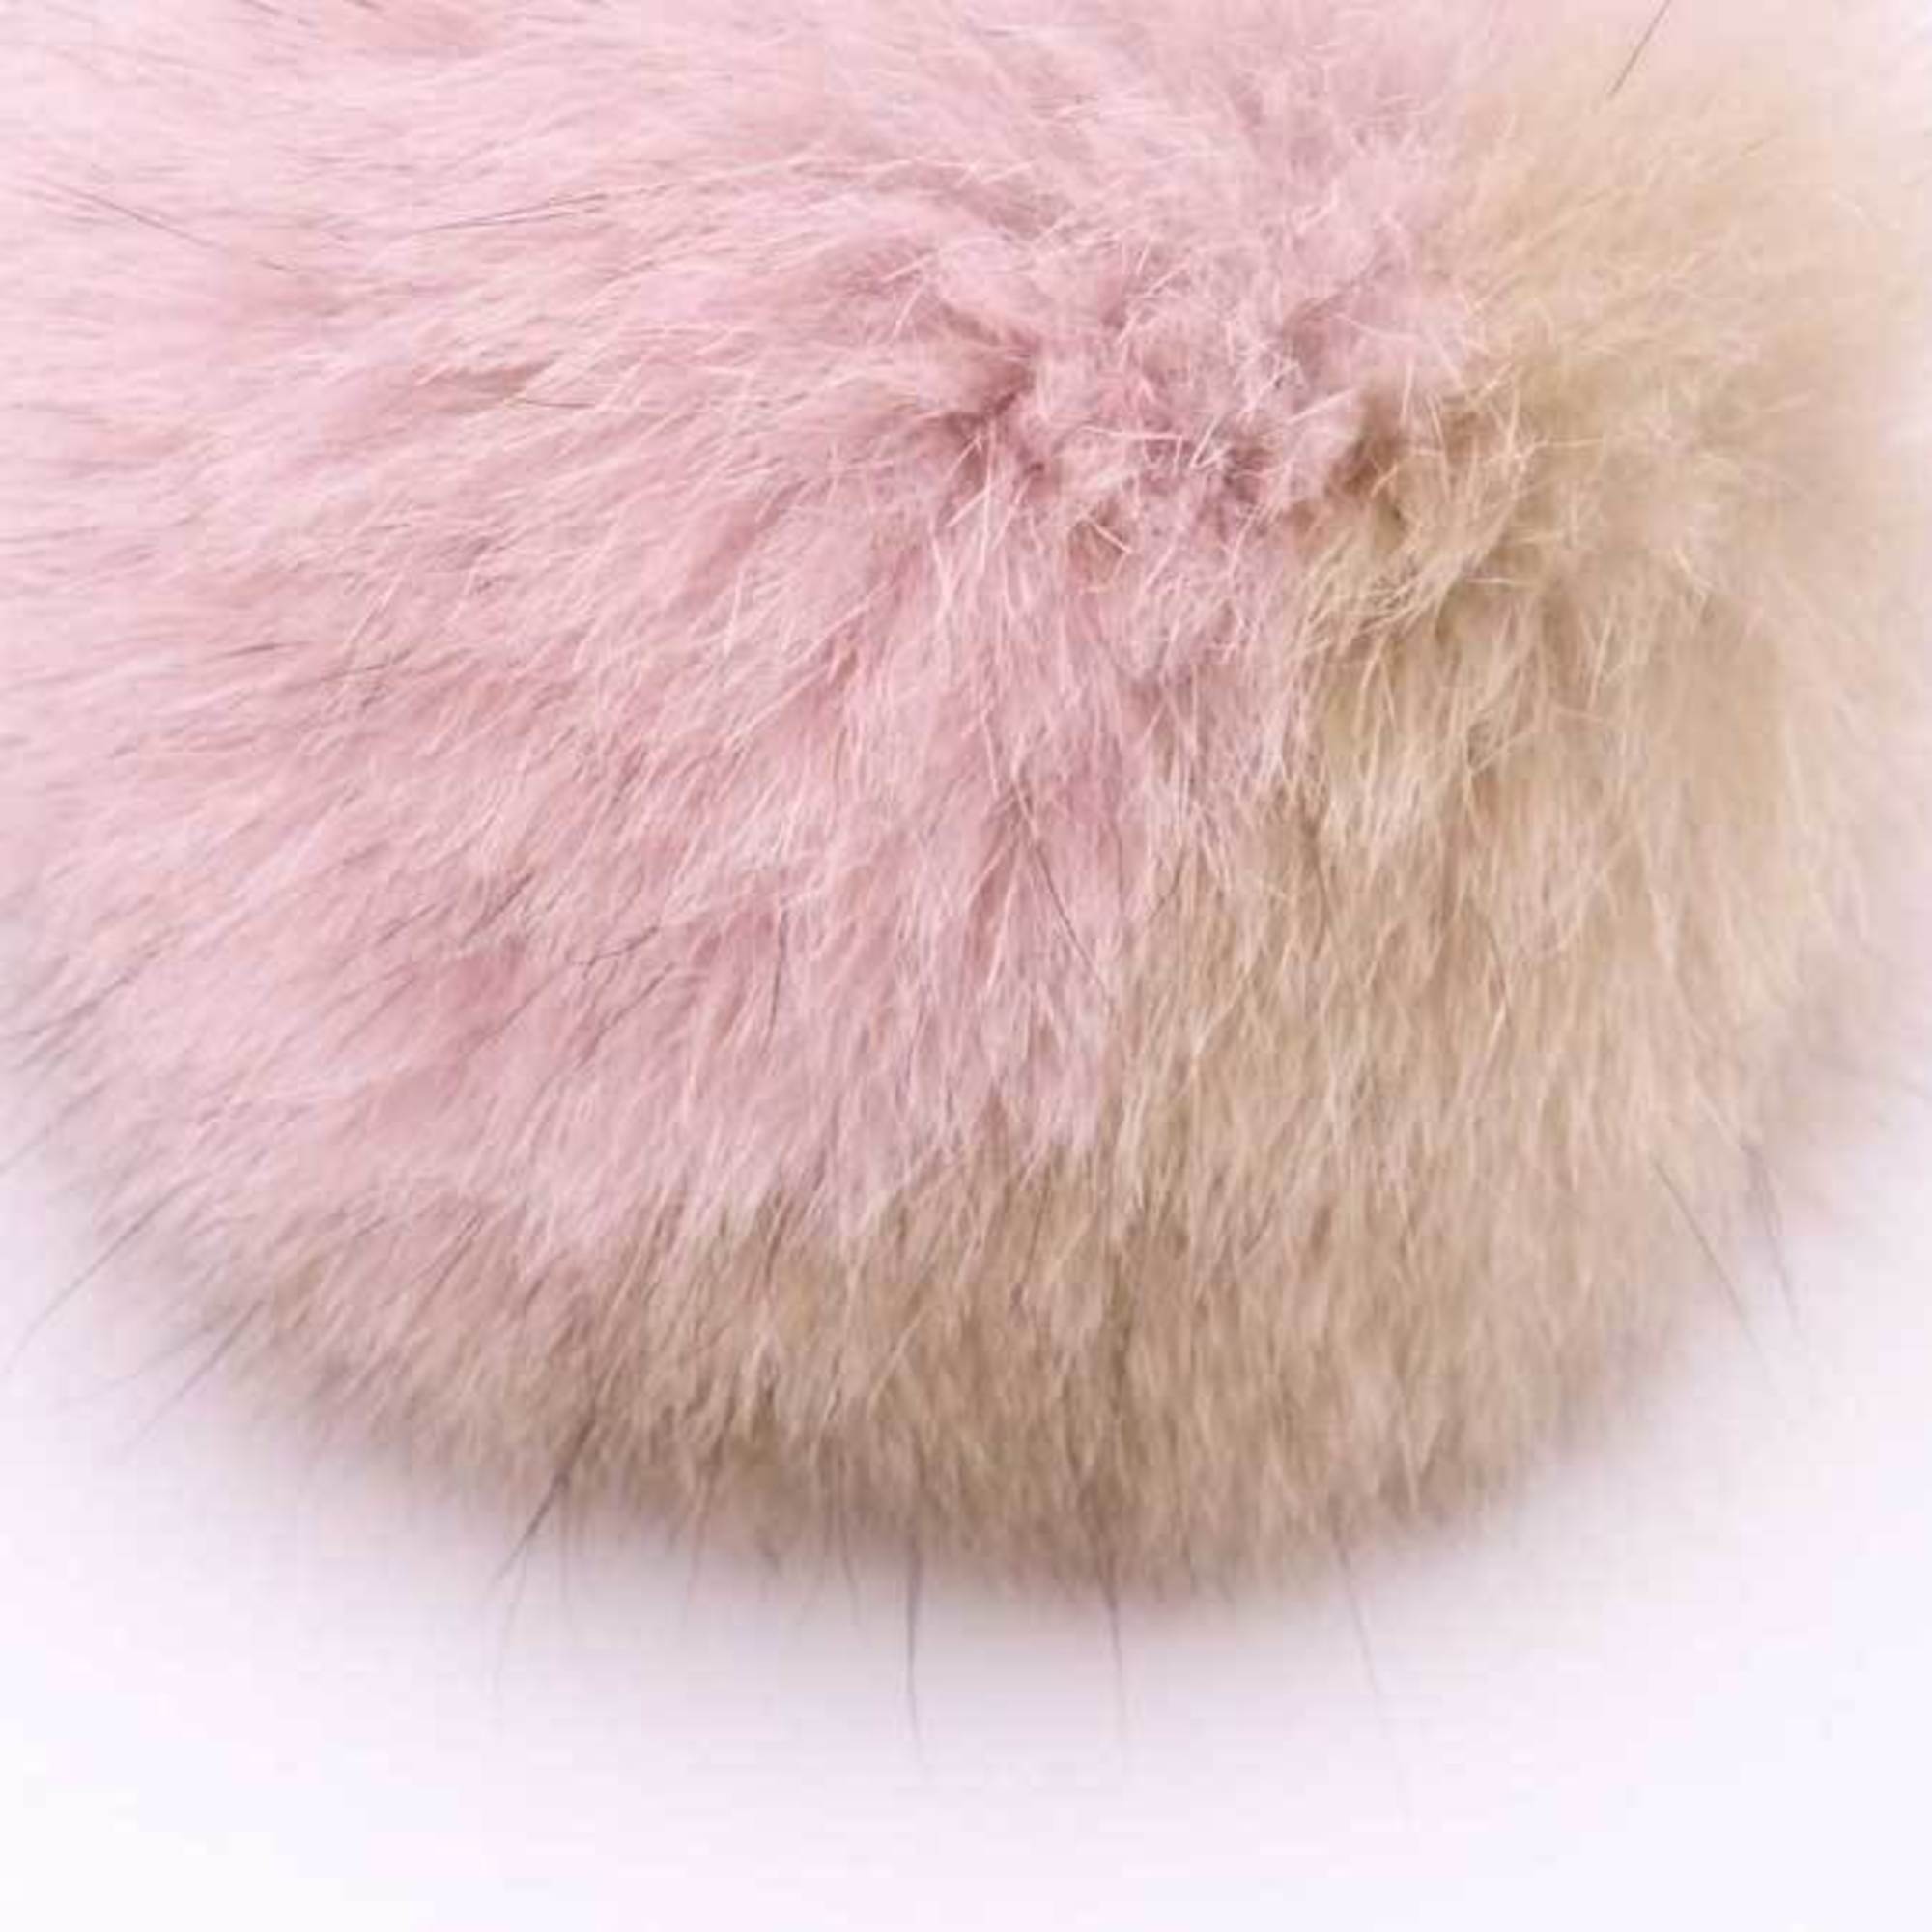 Fendi FENDI Charm Pom Fur/Leather Pink x Beige Gold Women's e54490a